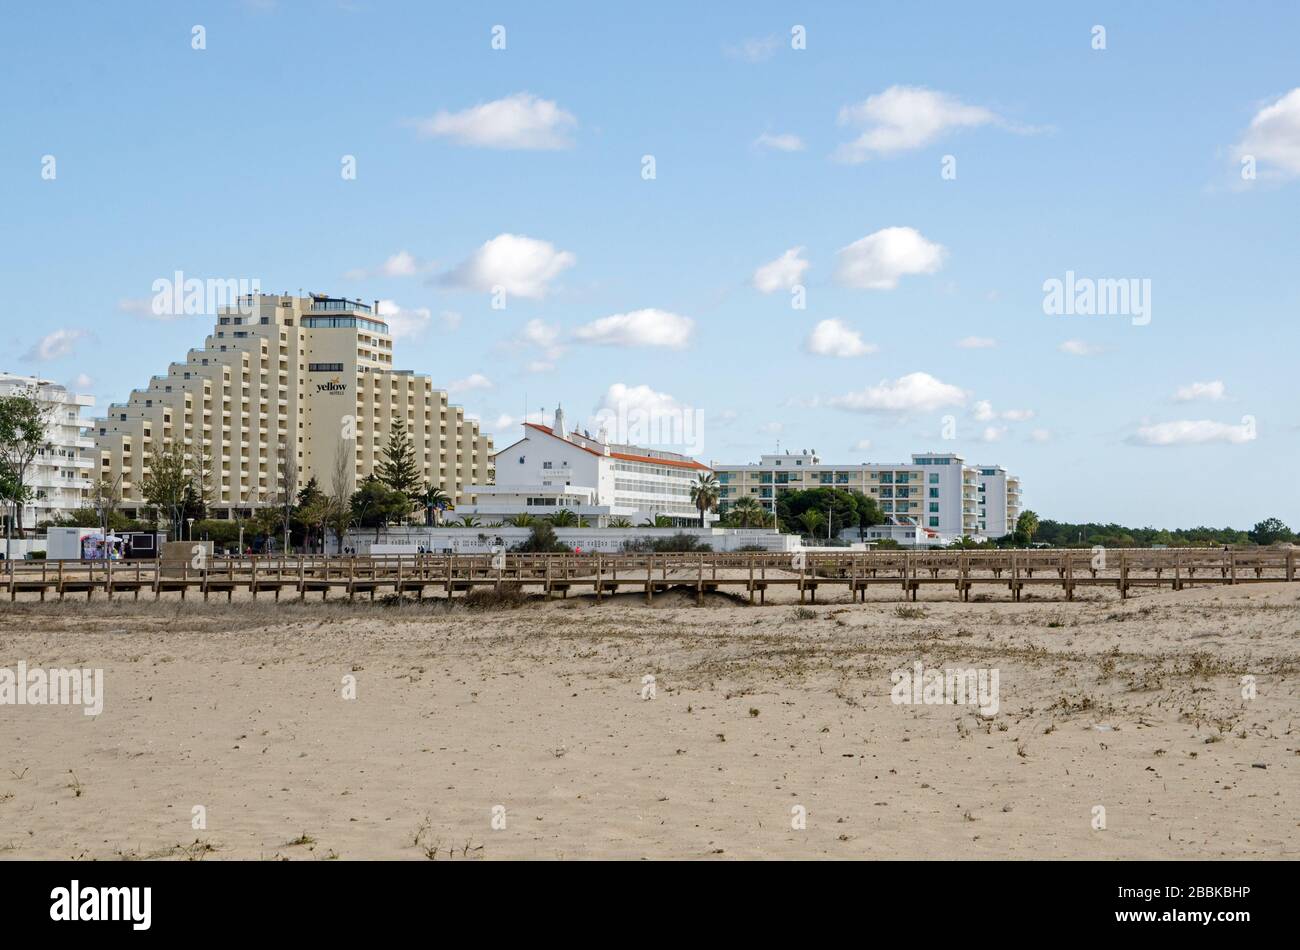 Monte Gordo, Portugal - November 18, 2019: Hotels overlooking the beach at the Algarve seaside resort of Monte Gordo in Portugal. Stock Photo